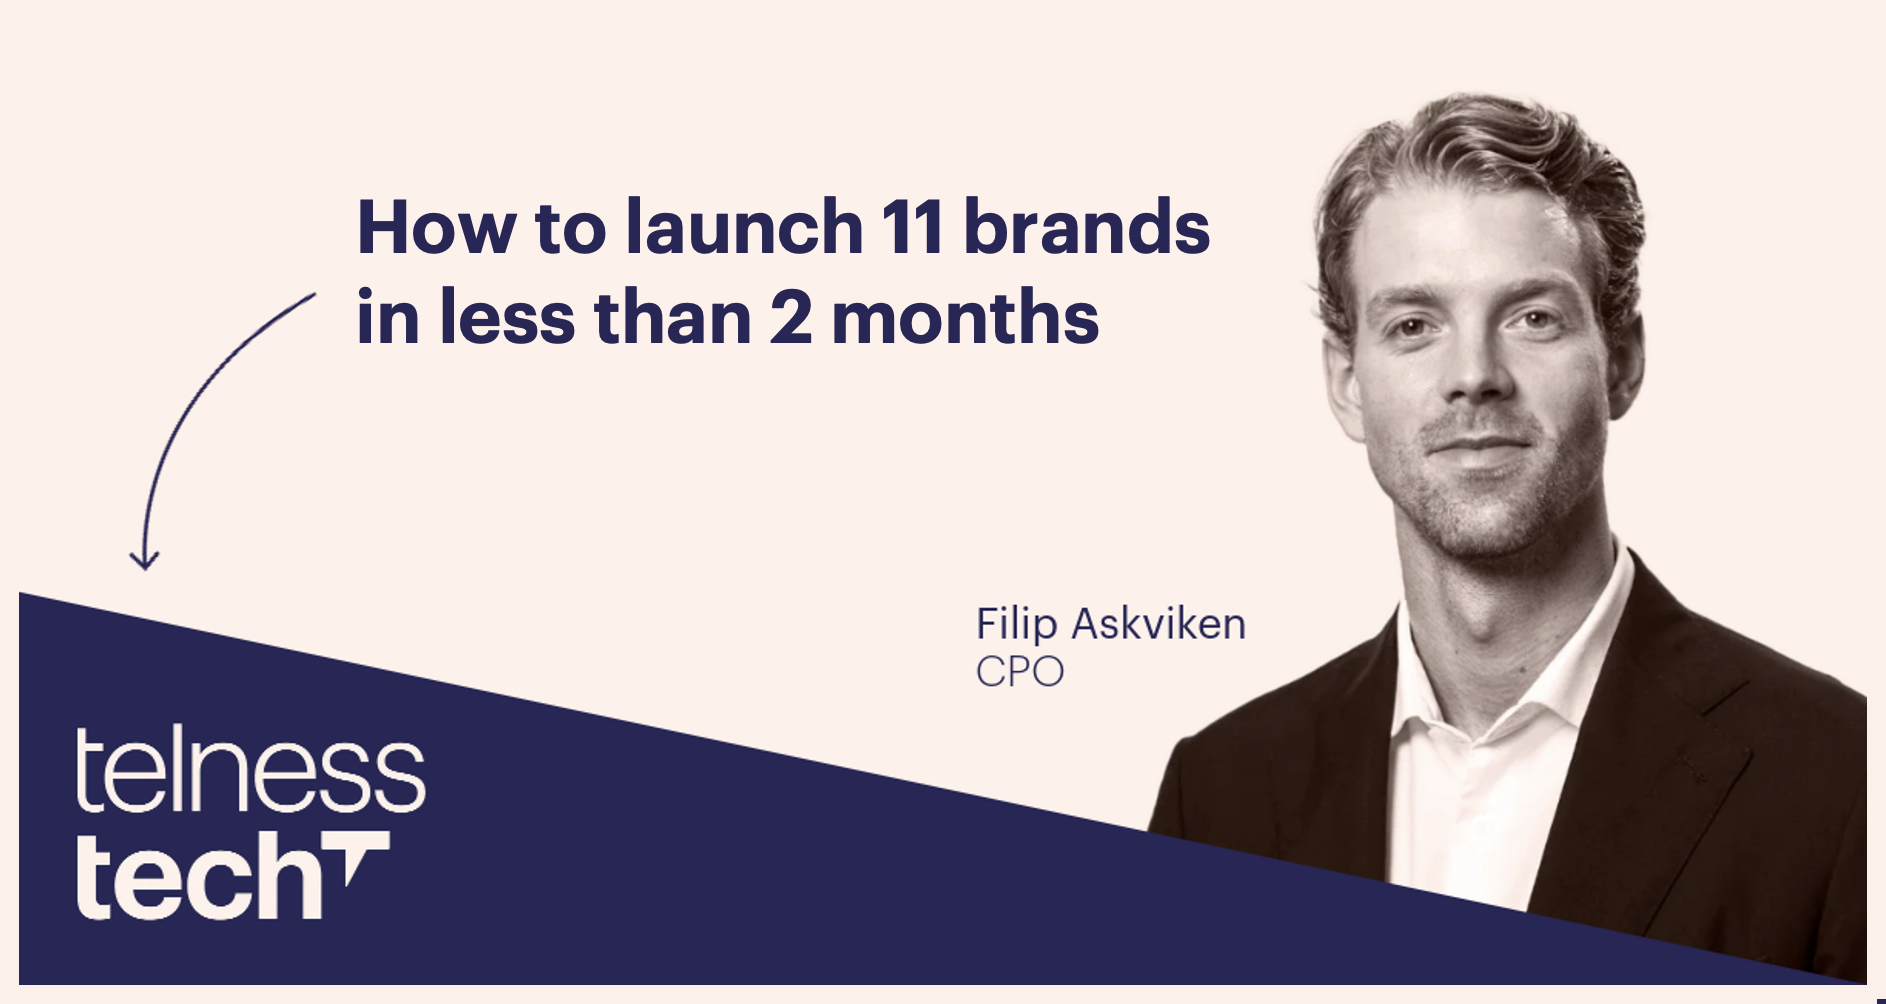 Filip Askviken, Chief Product Officer at Telness Tech.